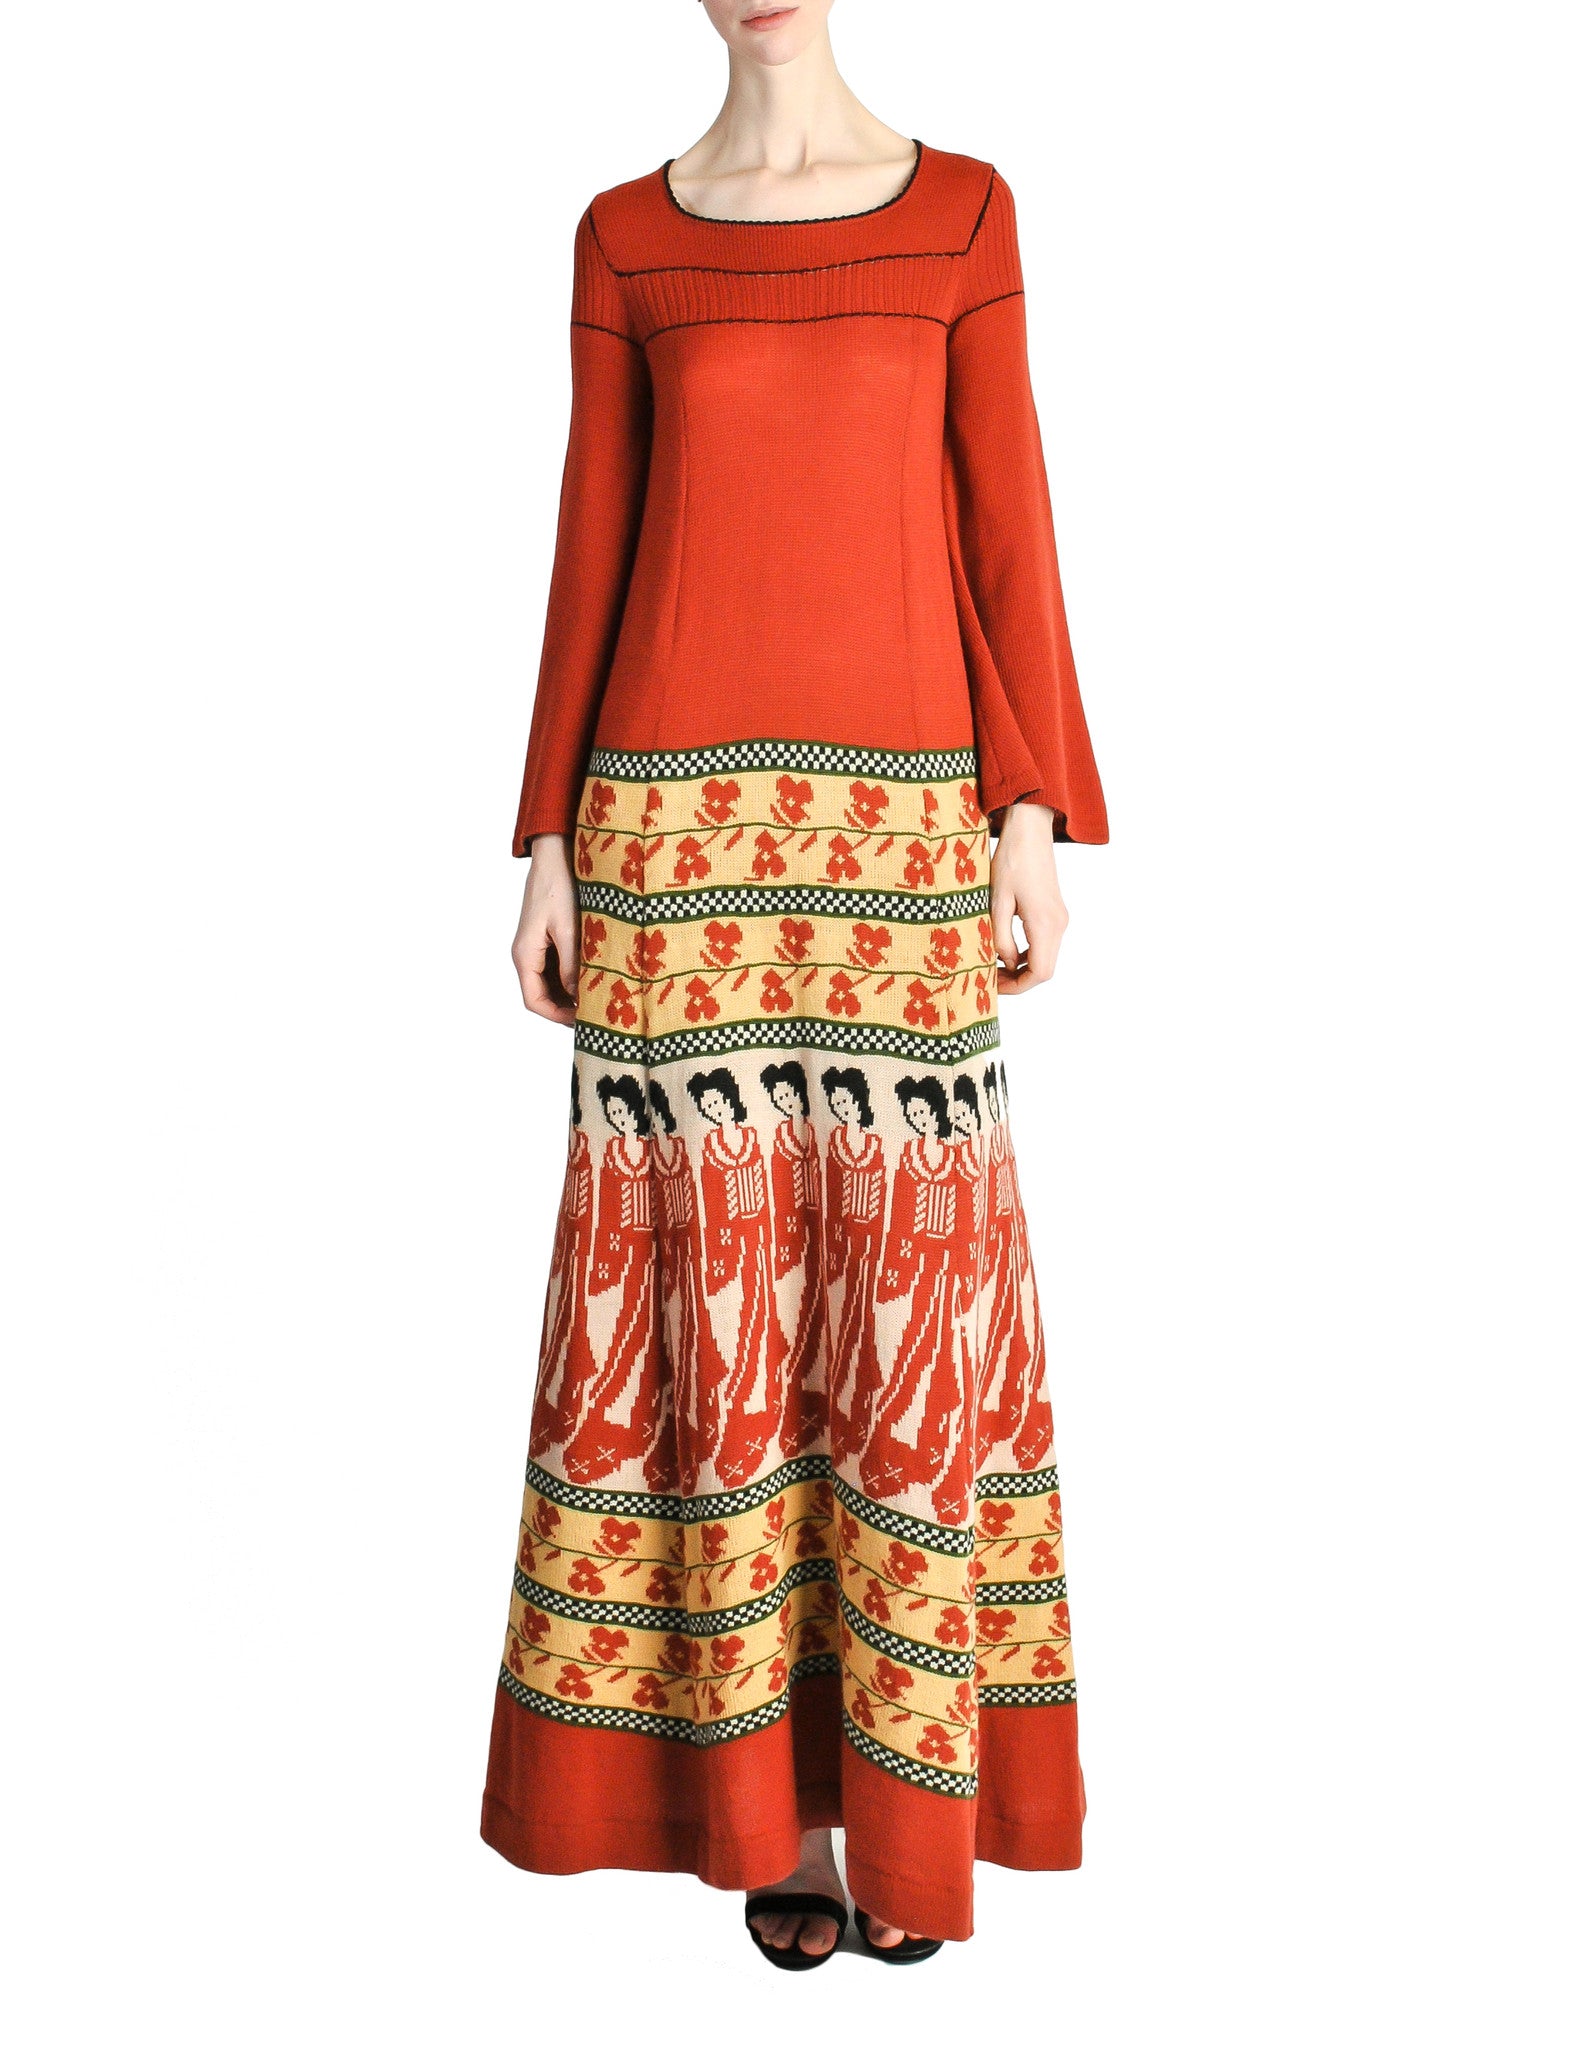 Clutch Cargo Vintage Rust Floral Geisha Knit Sweater Dress